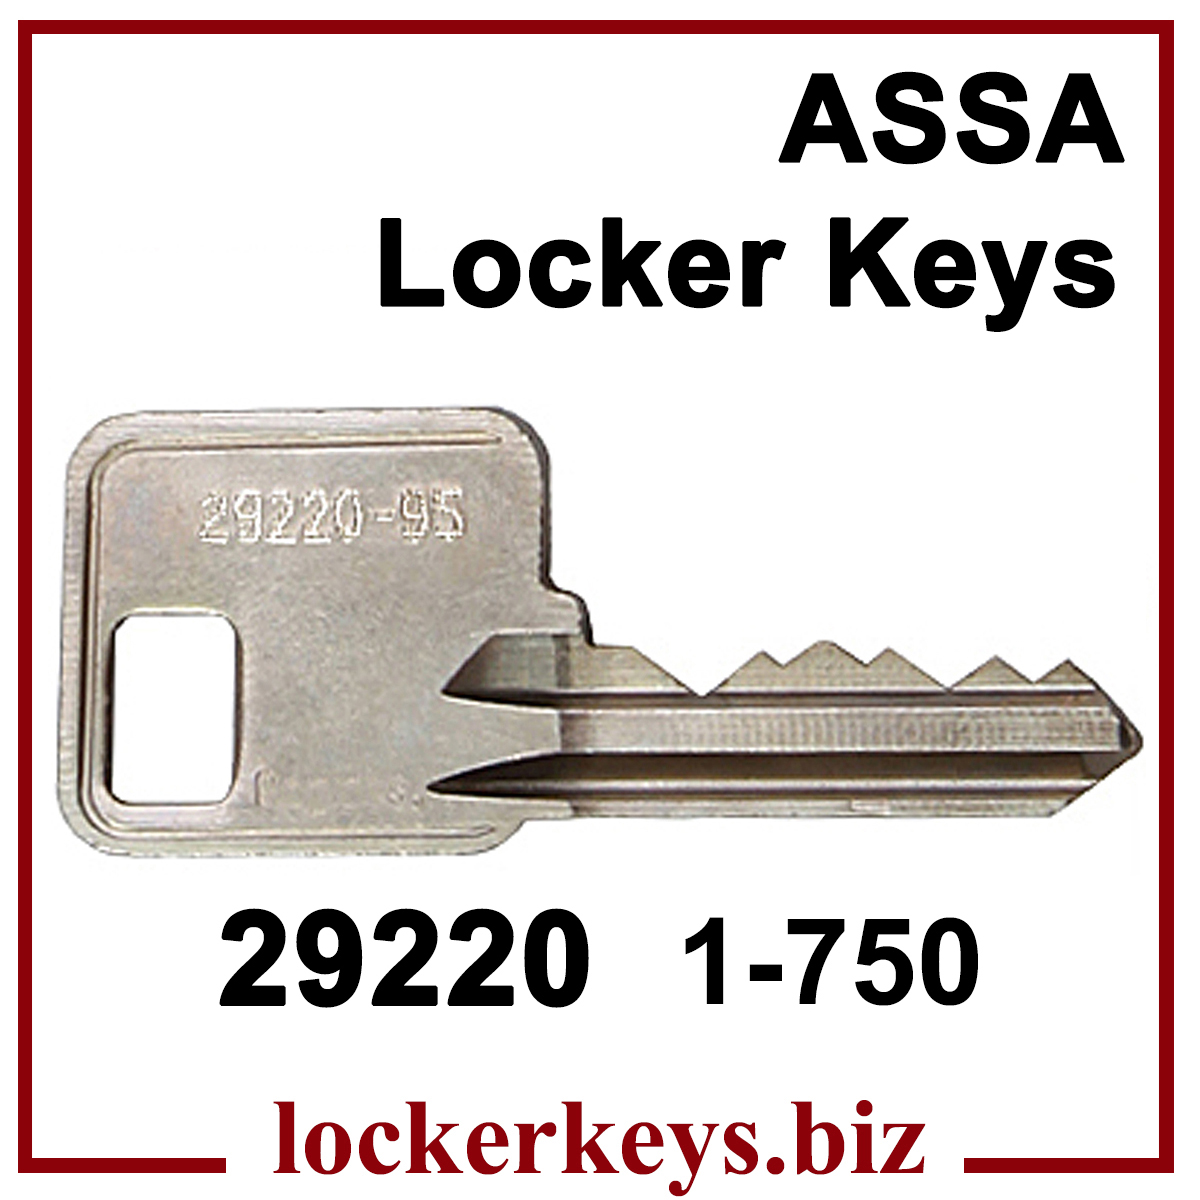 ASSA Keys for Lockers in range 29220 1 - 750